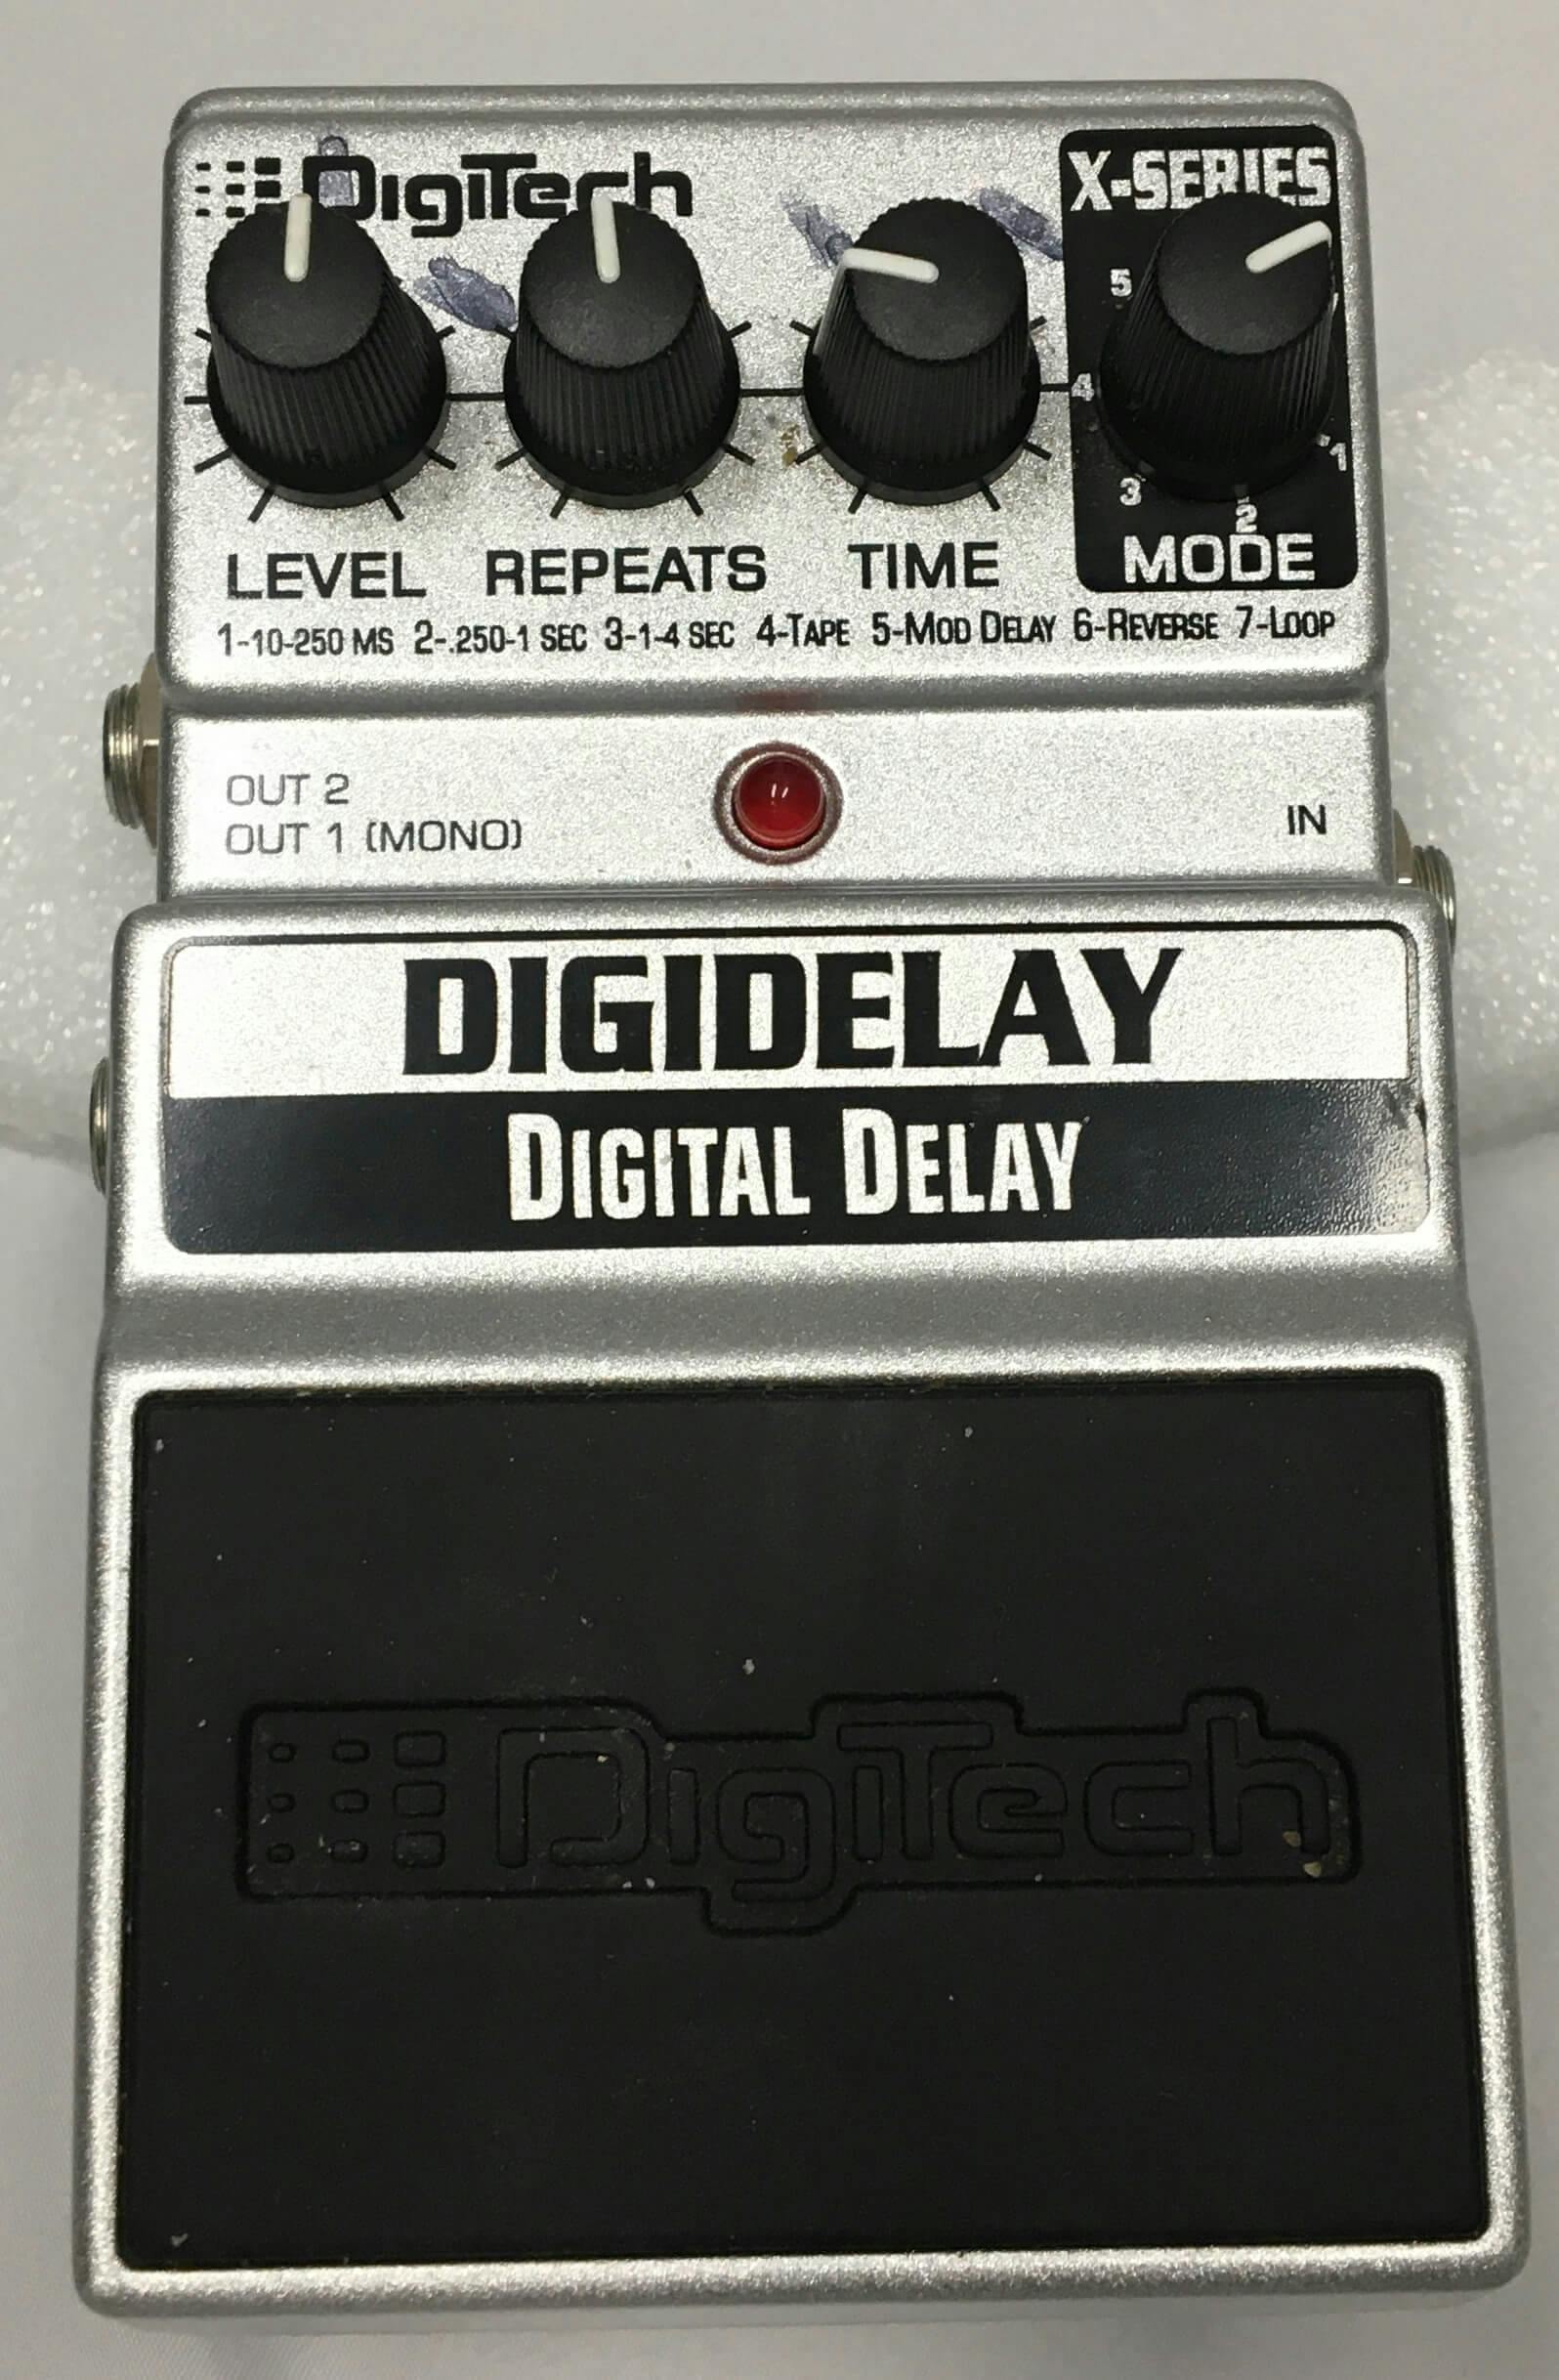 Digitech digidelay